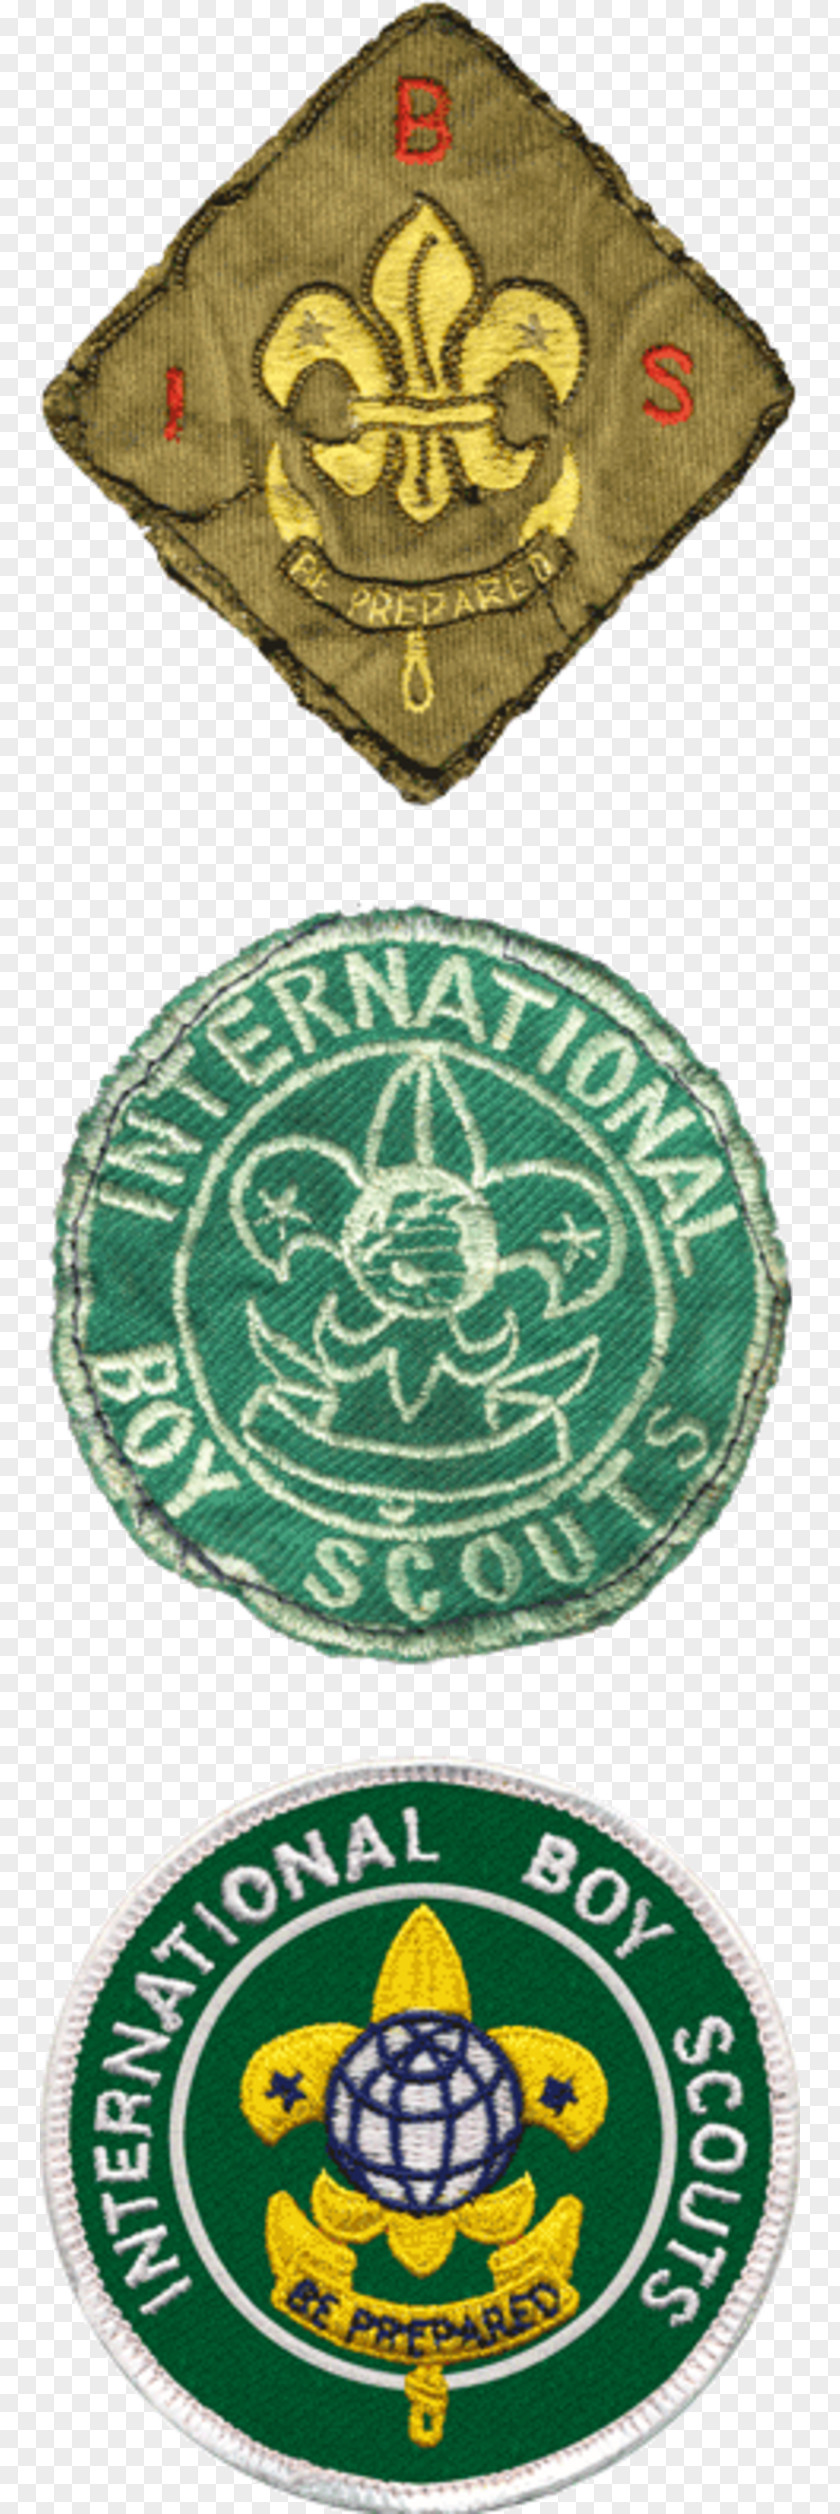 Scout Troop Emblem Scouting National Jamboree International Boy Scouts, 1 Badge PNG